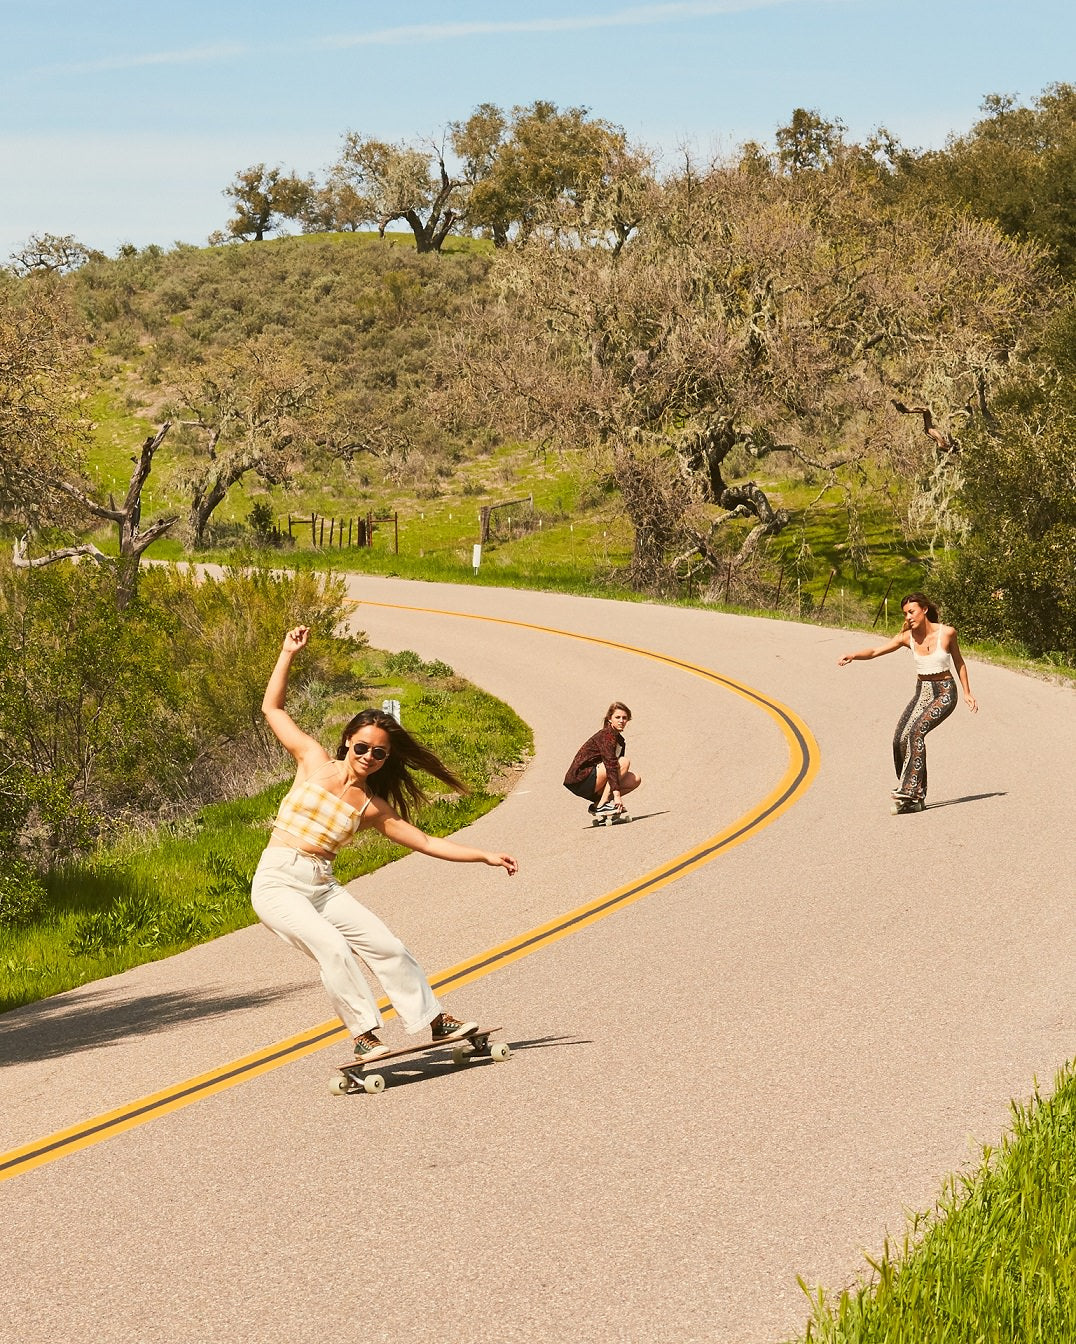 Arbor lady skateboard riders